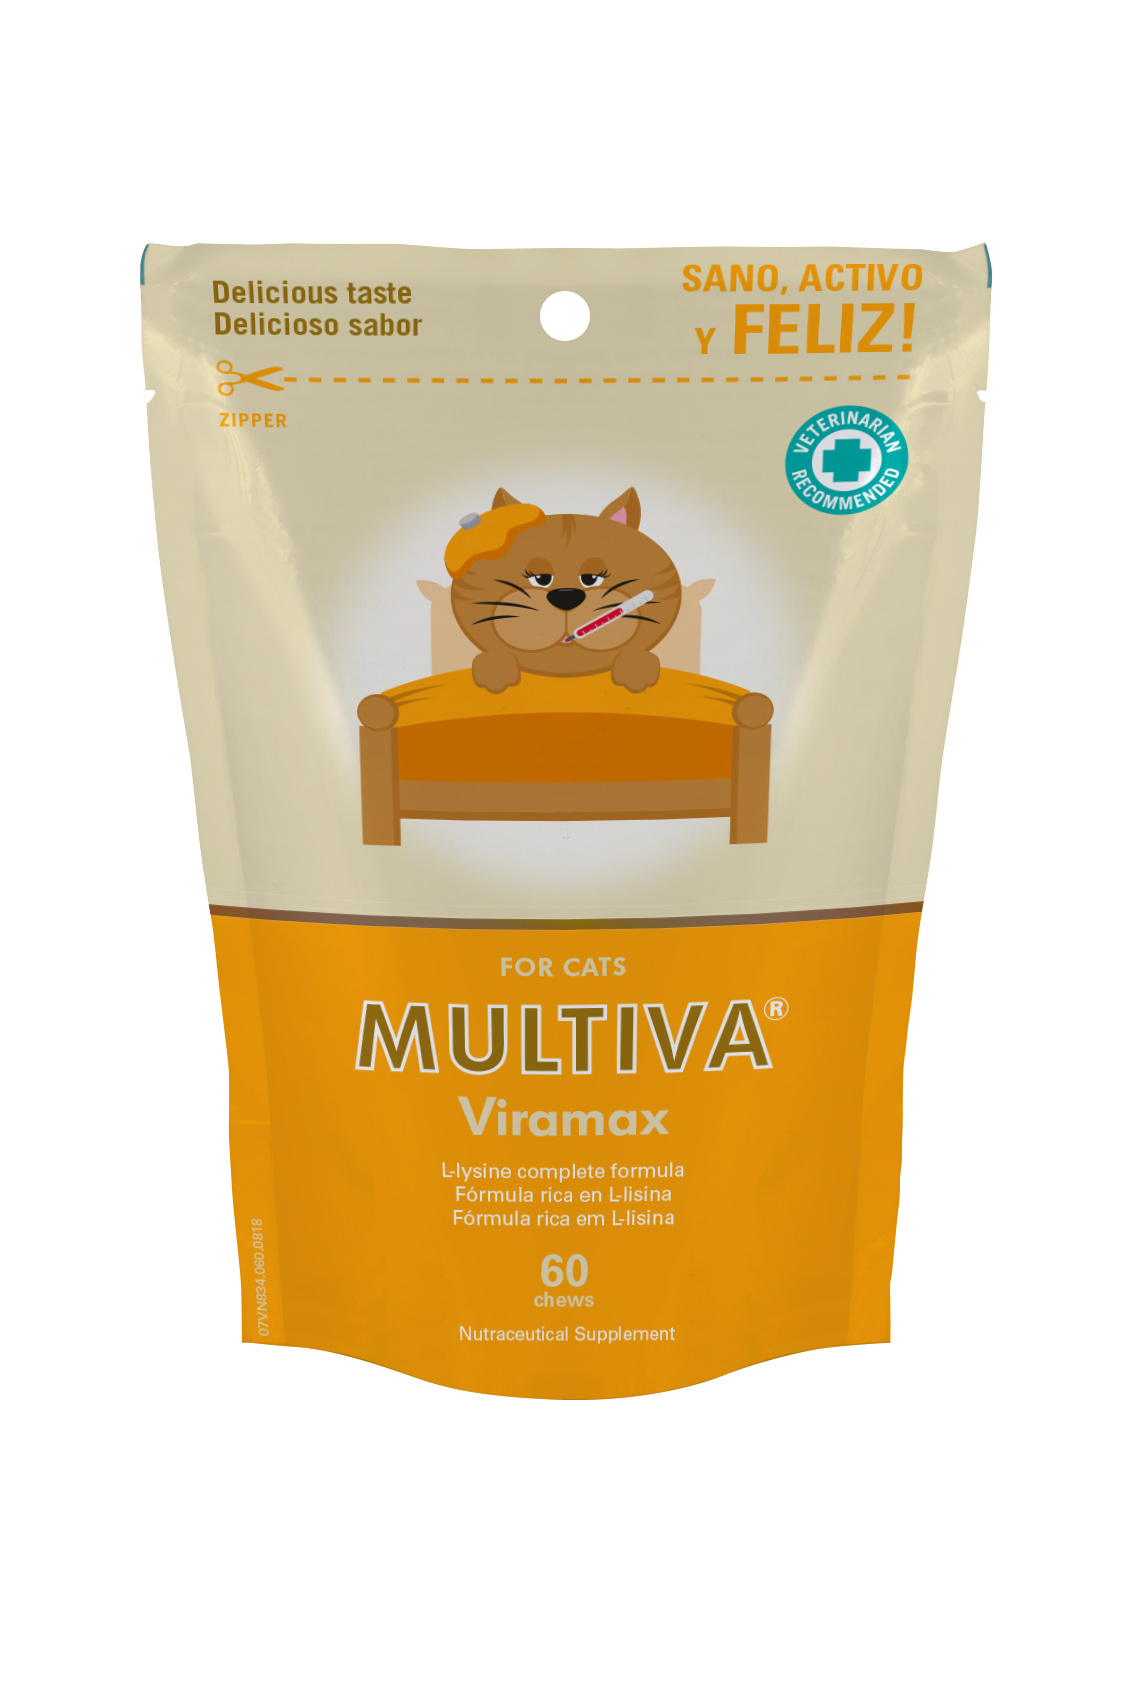 Vetnova Multiva Viramax Complemento alimenticio para gatos